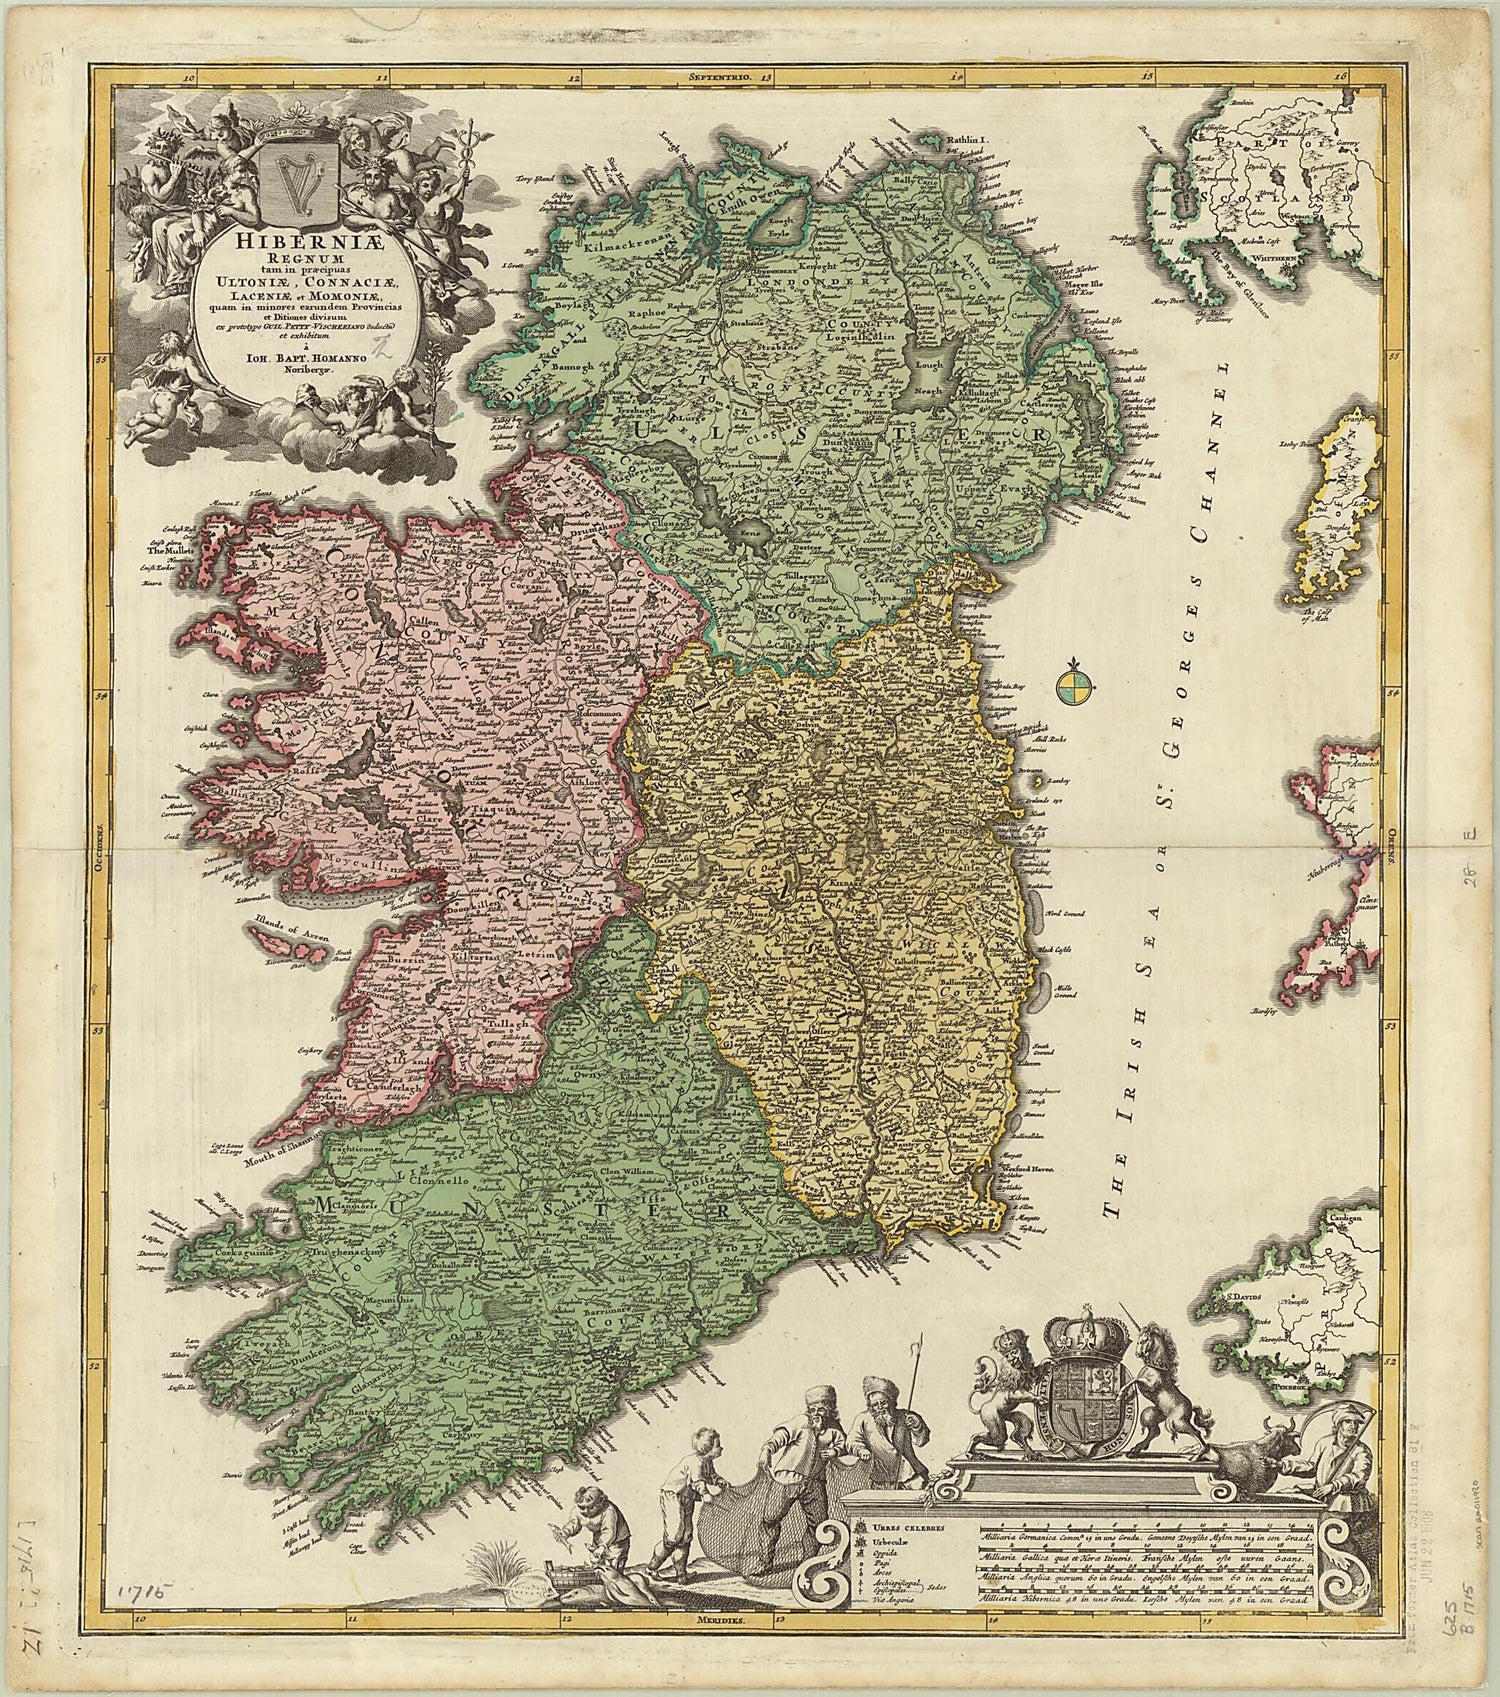 This old map of The Kingdom of Ireland, Divided As Much Into the Main Regions of Ulster, Connacht, Leinster and Munster. (Hiberniæ Regnum Tam In Præcipuas Ultoniæ, Connaciæ, Laceniæ Et Momoniæ, Quam In Minores Earundem Provincias Et Ditiones Divisu